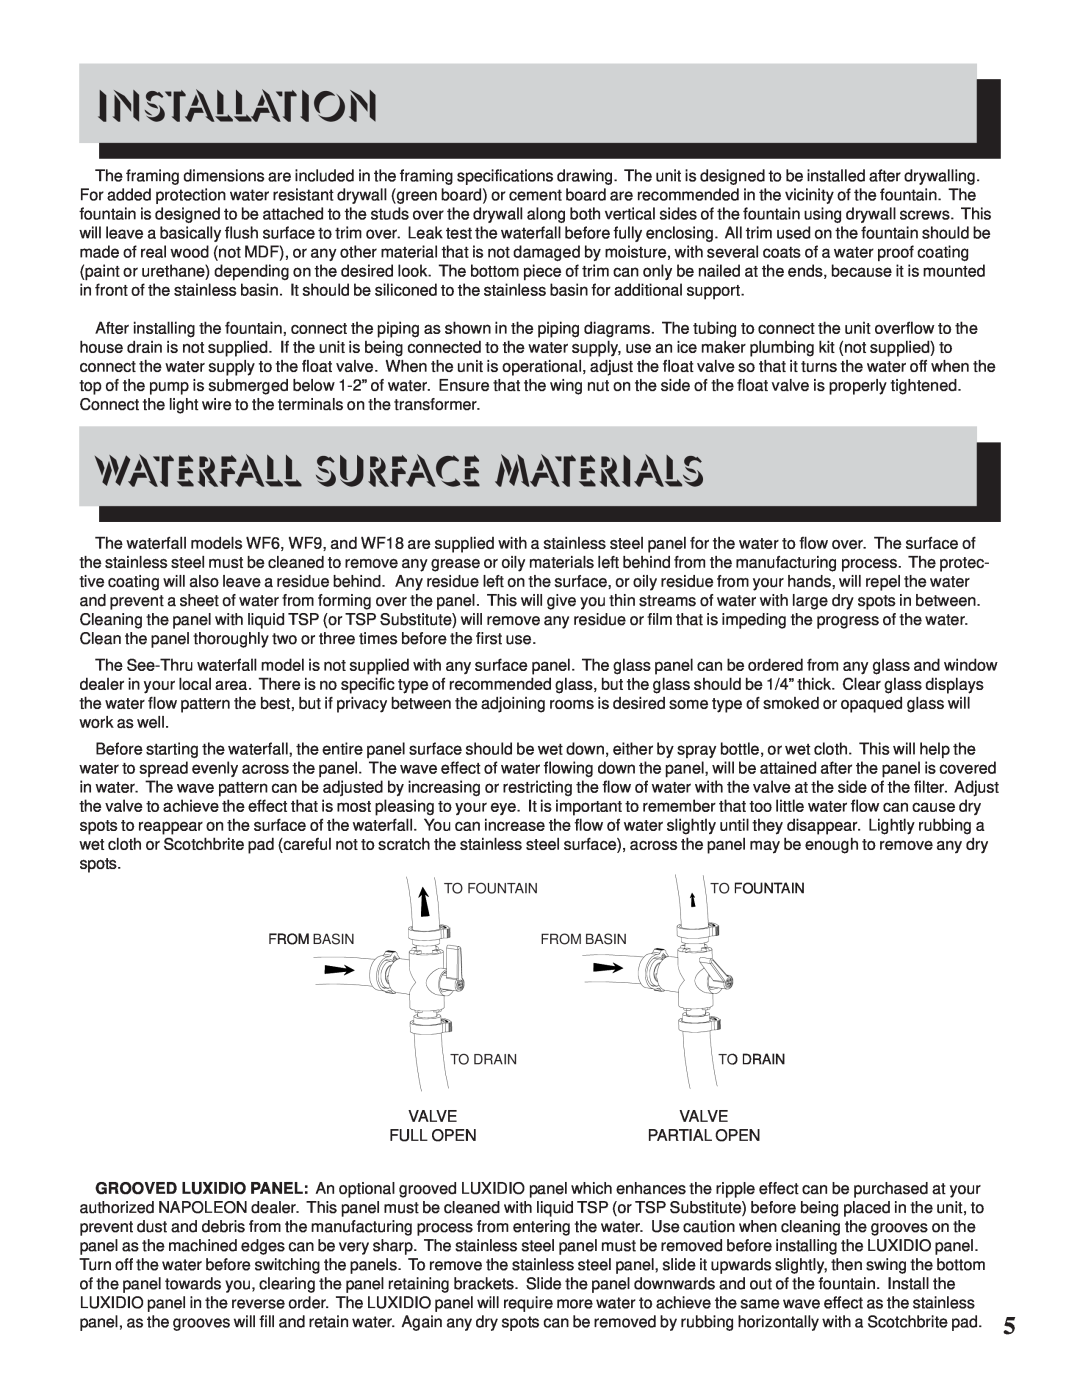 Napoleon Grills WF 18, WF9ST, WF 6, WF 9 manual Installation, Waterfall Surface Materials 